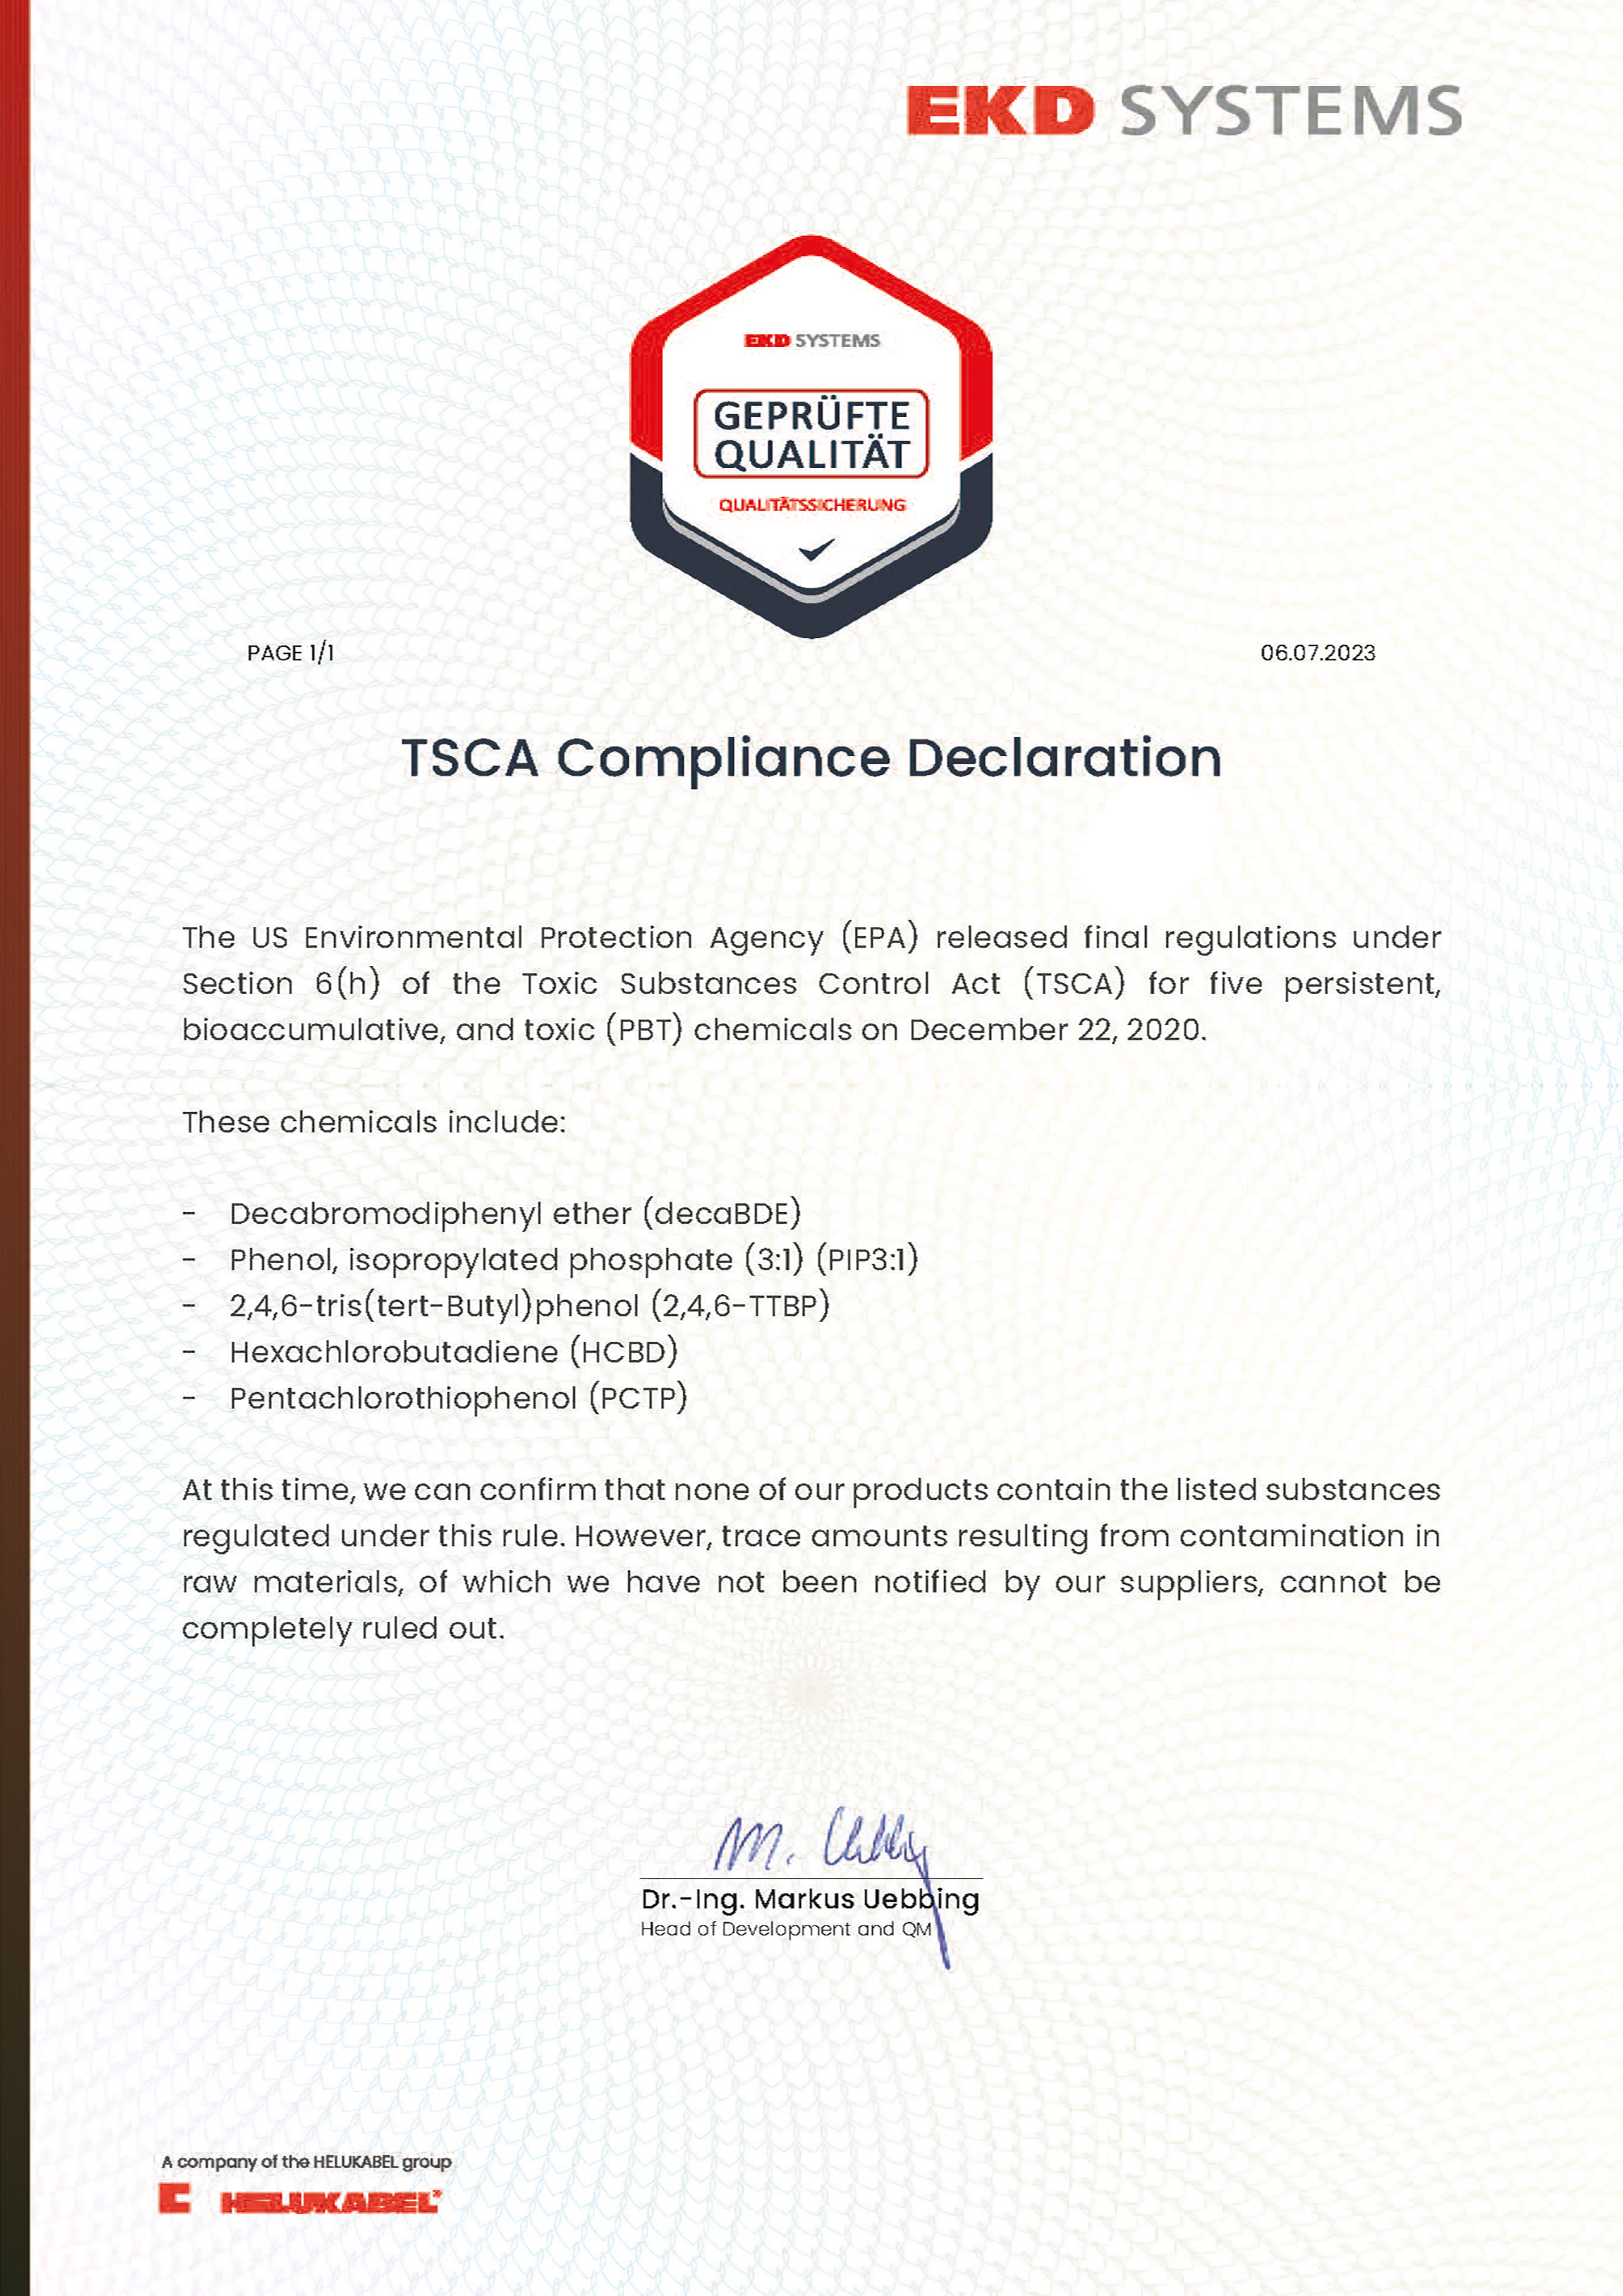 TSCA Compliance Declaration